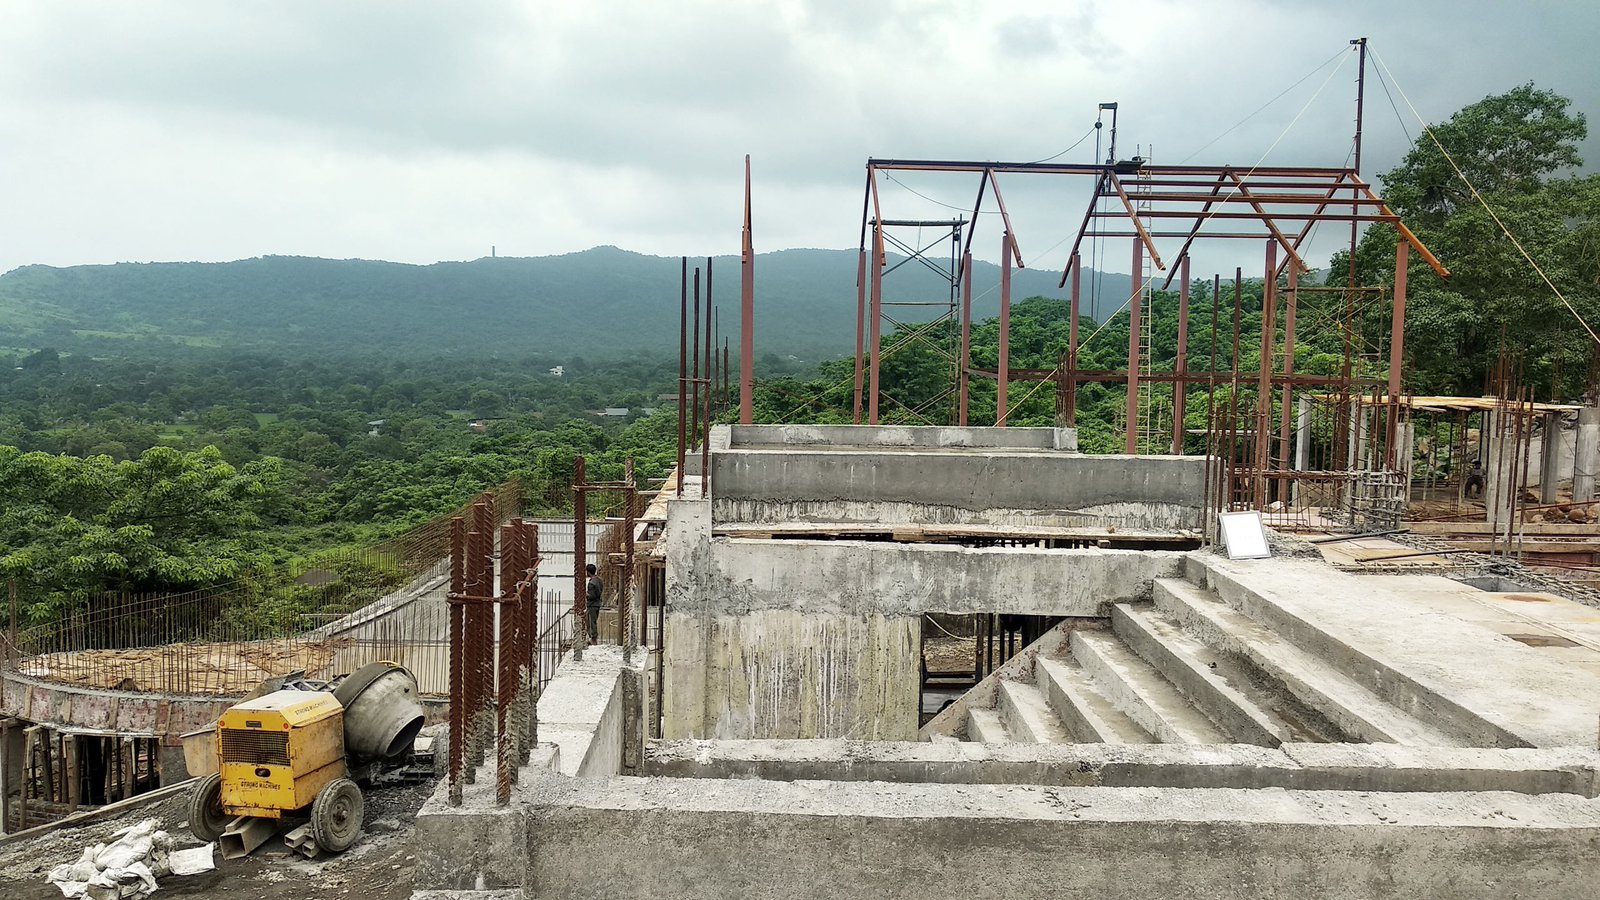 The Plantation Retreat under construction in alibaug